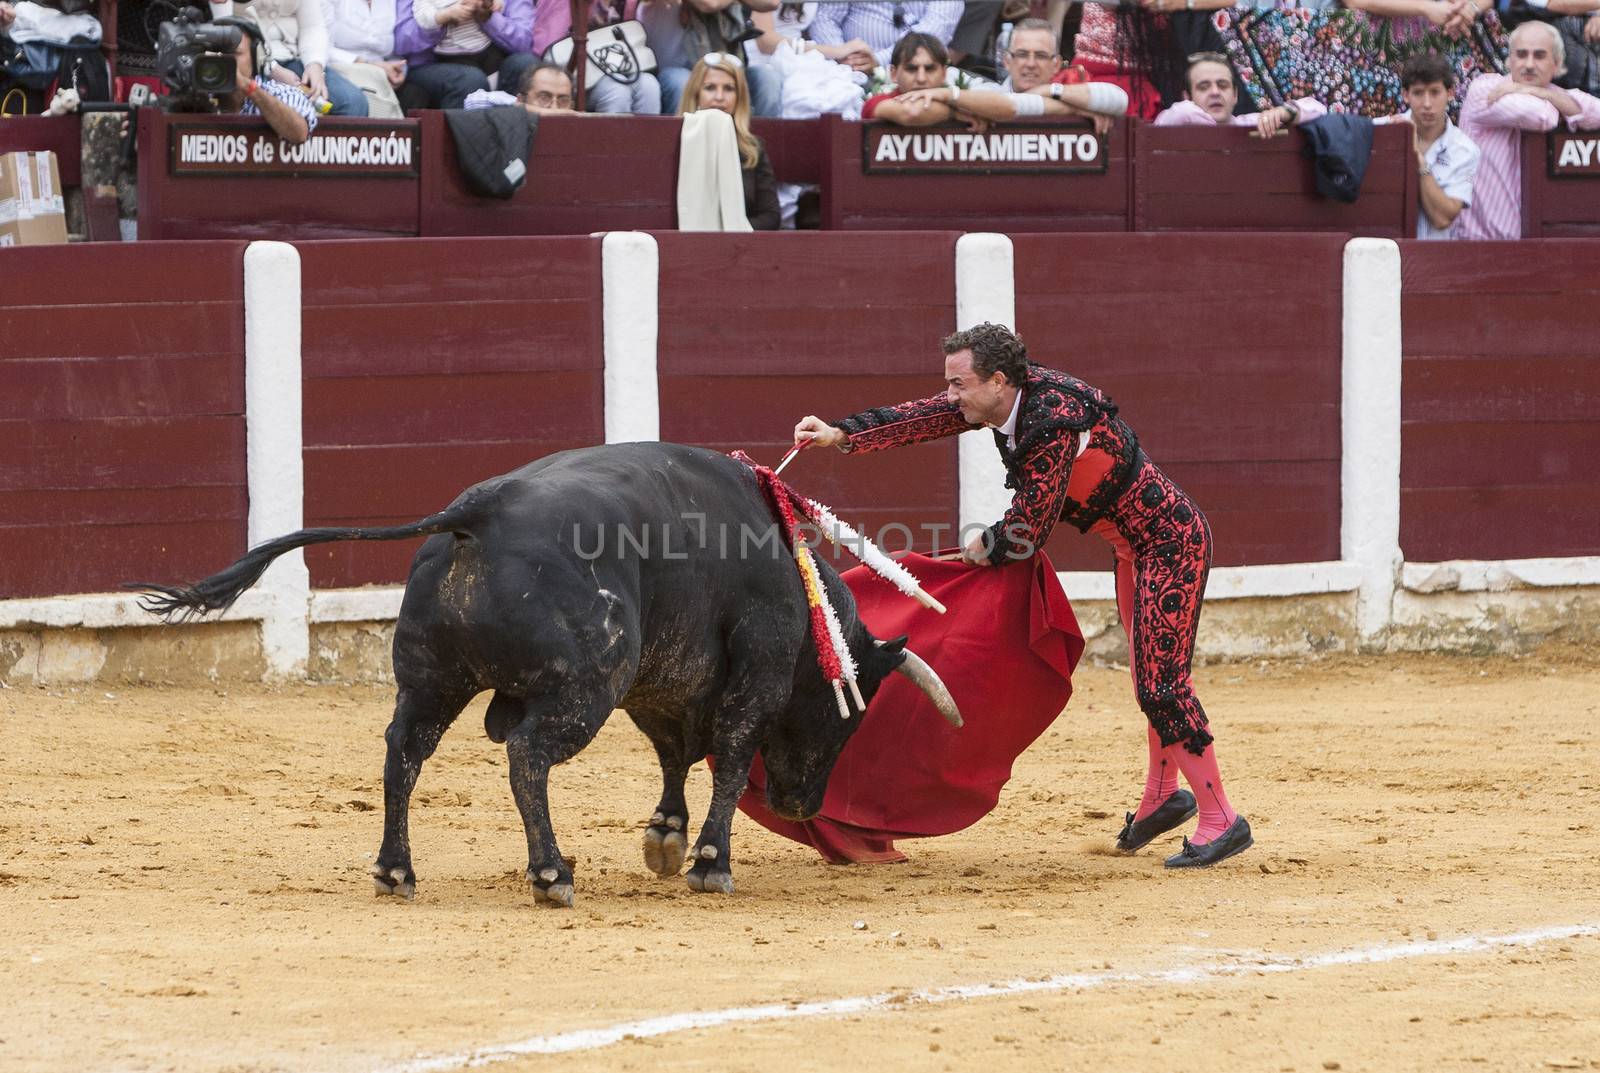 Ubeda, Jaen province, SPAIN - 3 october 2010: Spainish bullfighter Rafaelillo bullfighting stabbing a bull in the Bullring of Ubeda, Jaen province, Andalusia, Spain